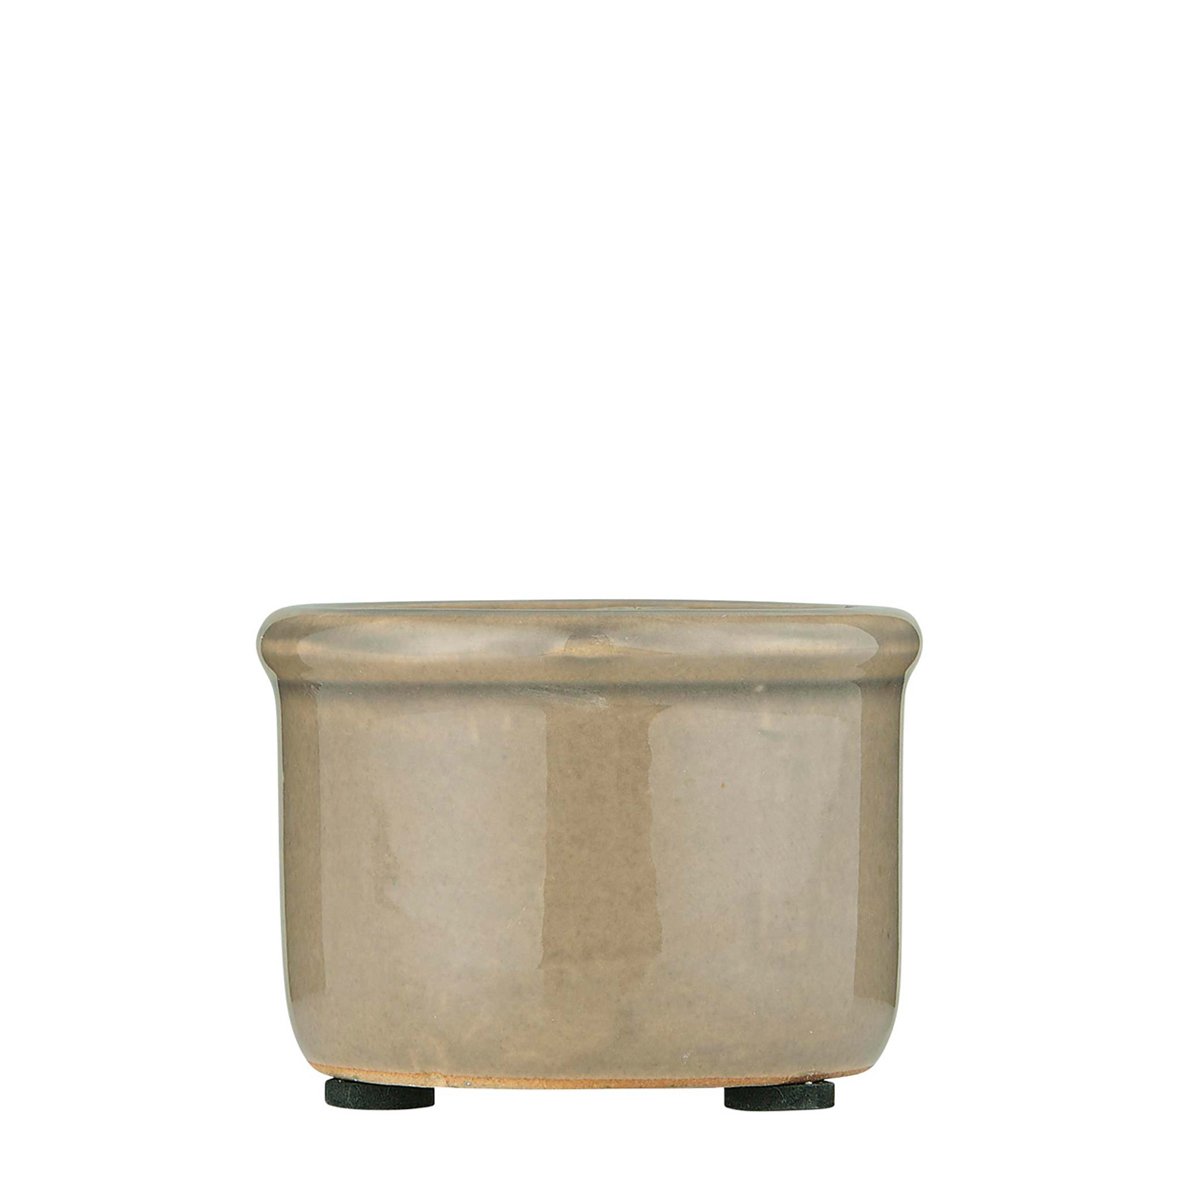 Mini urtepotteskjuler/minivase – sand
H: 4,7 cm